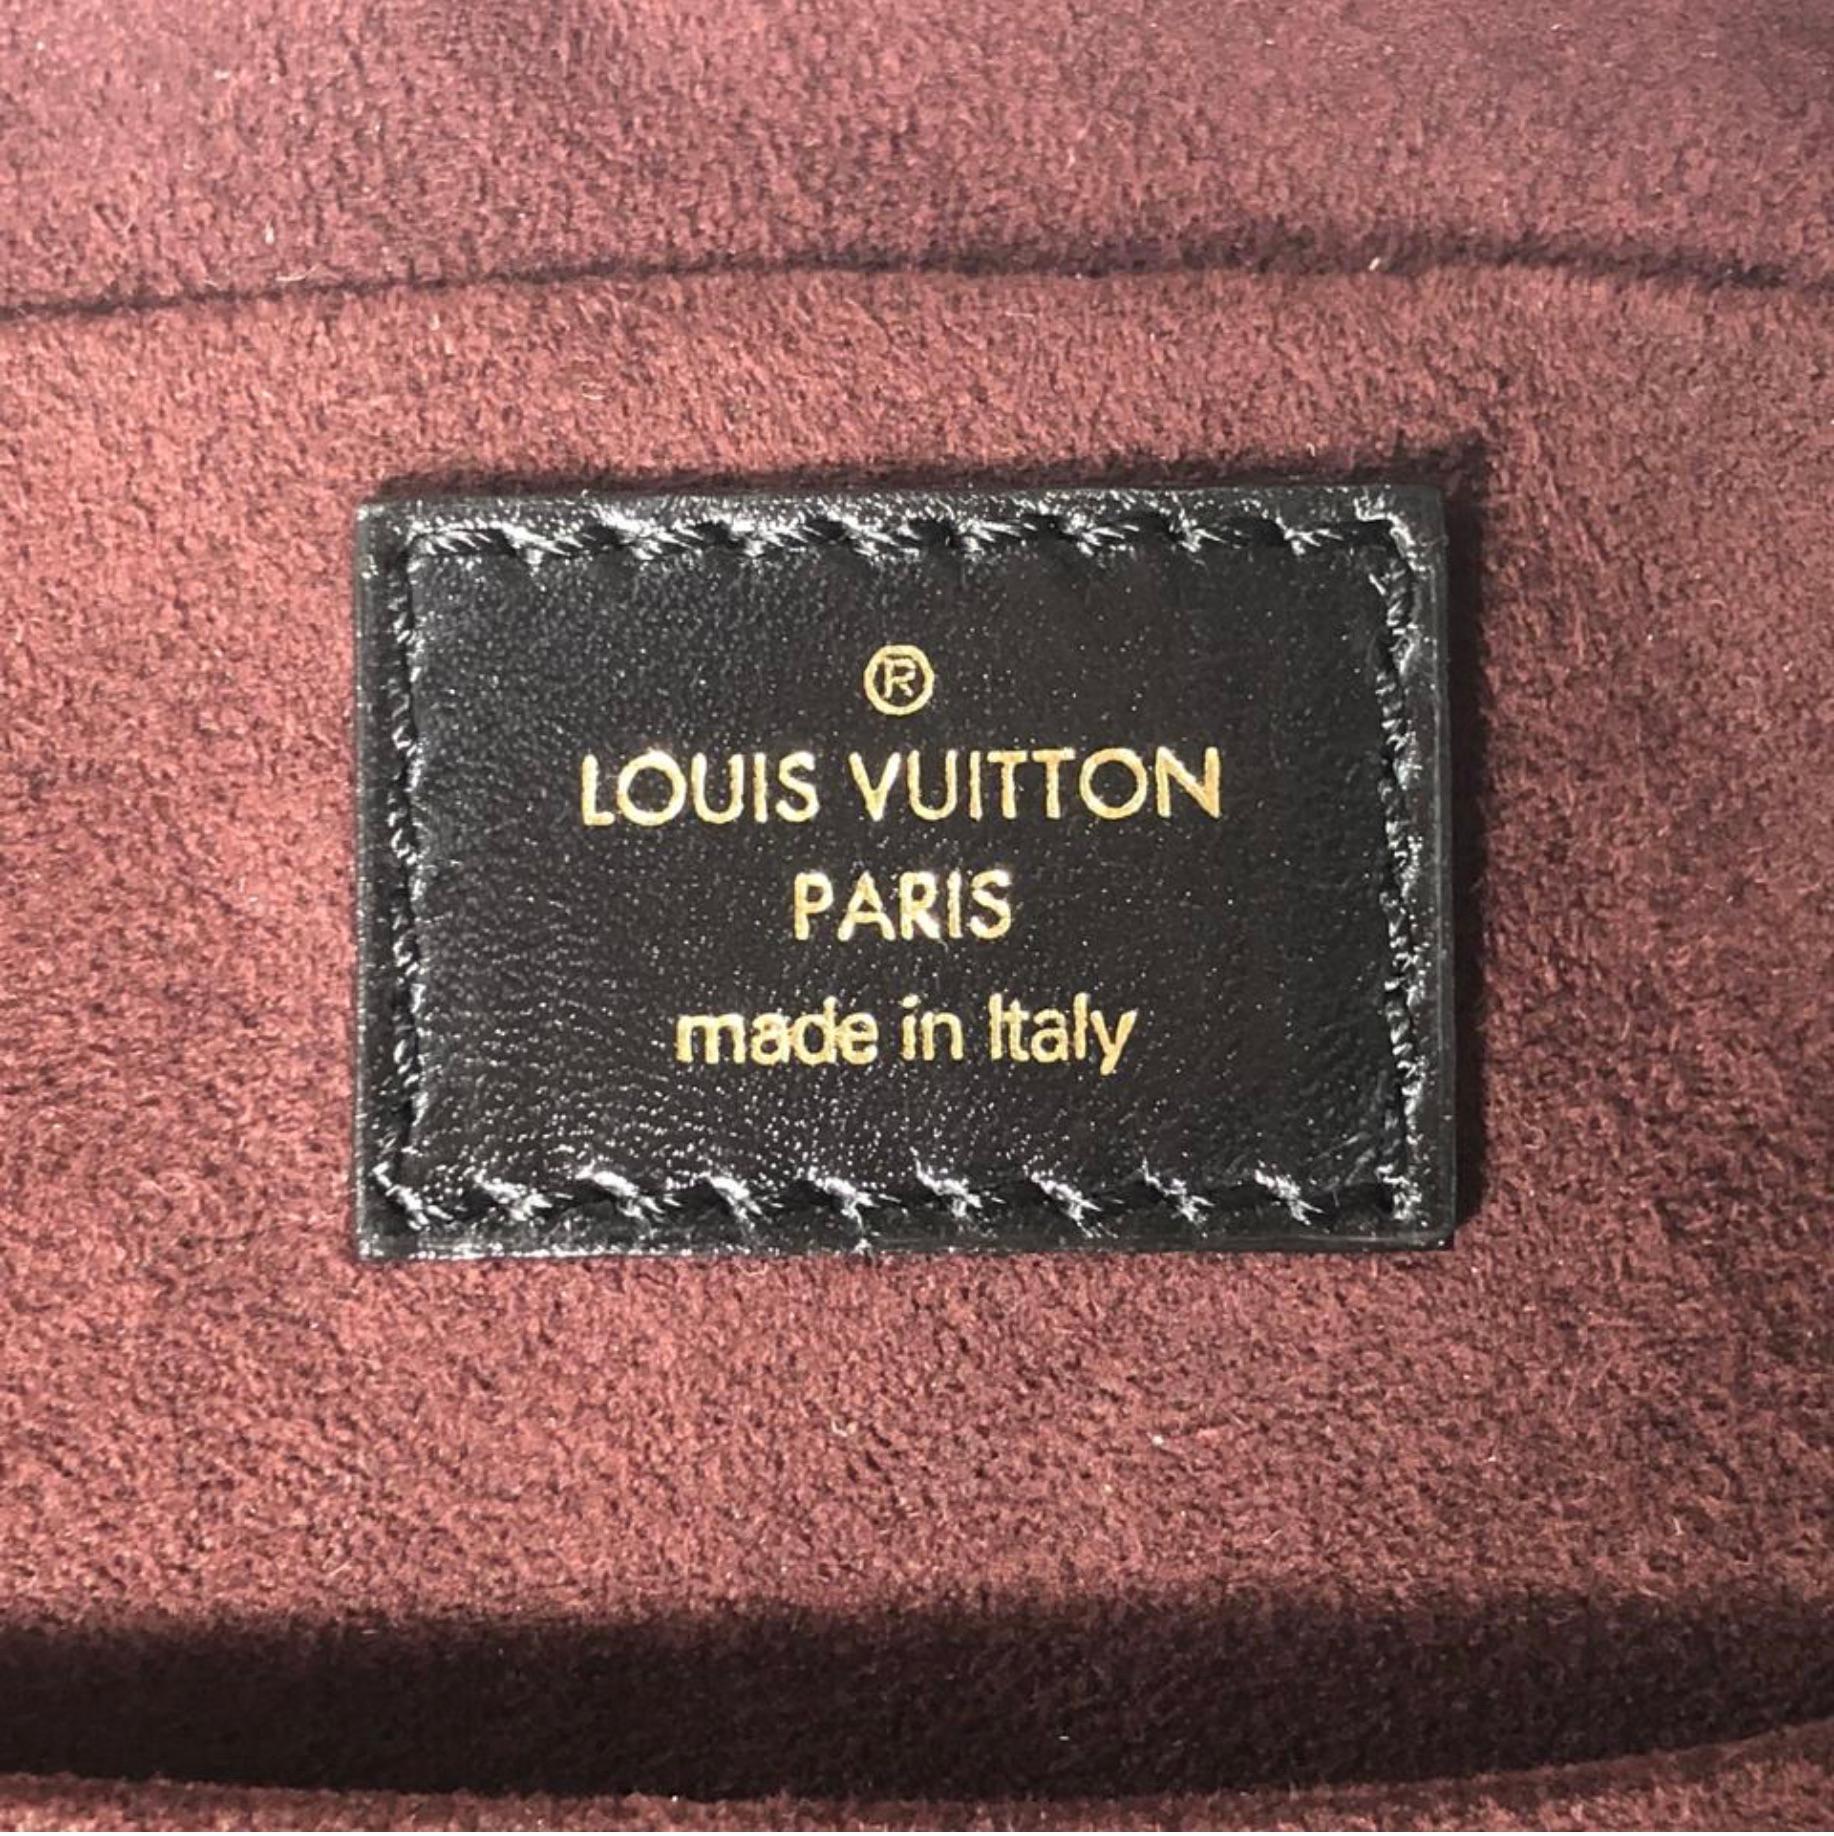 Louis Vuitton Vienna Leather Mizi Satchel Handbag For Sale 5